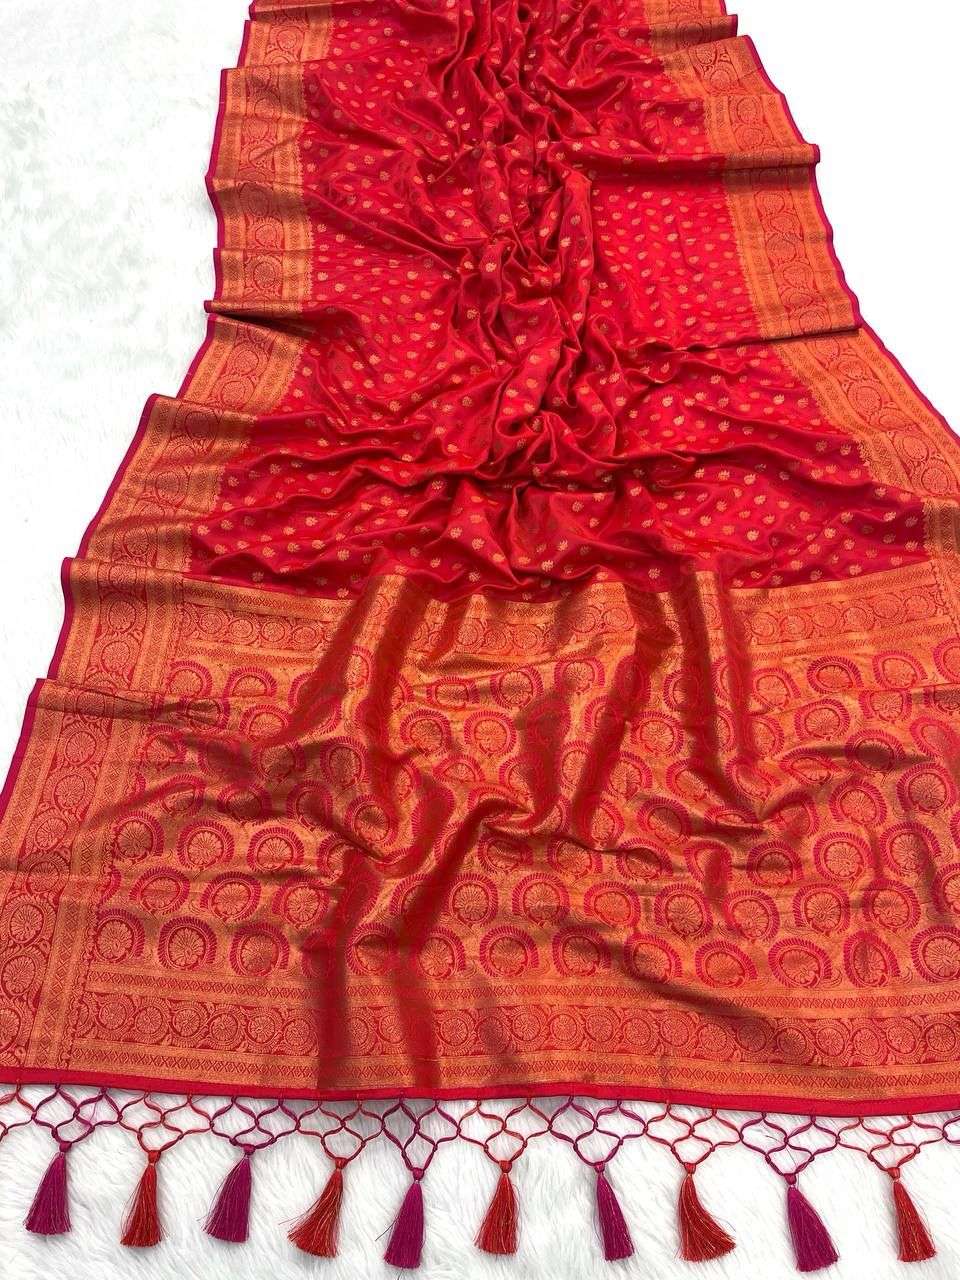 Wedding Special Red color soft banarasi silk saree collectio...